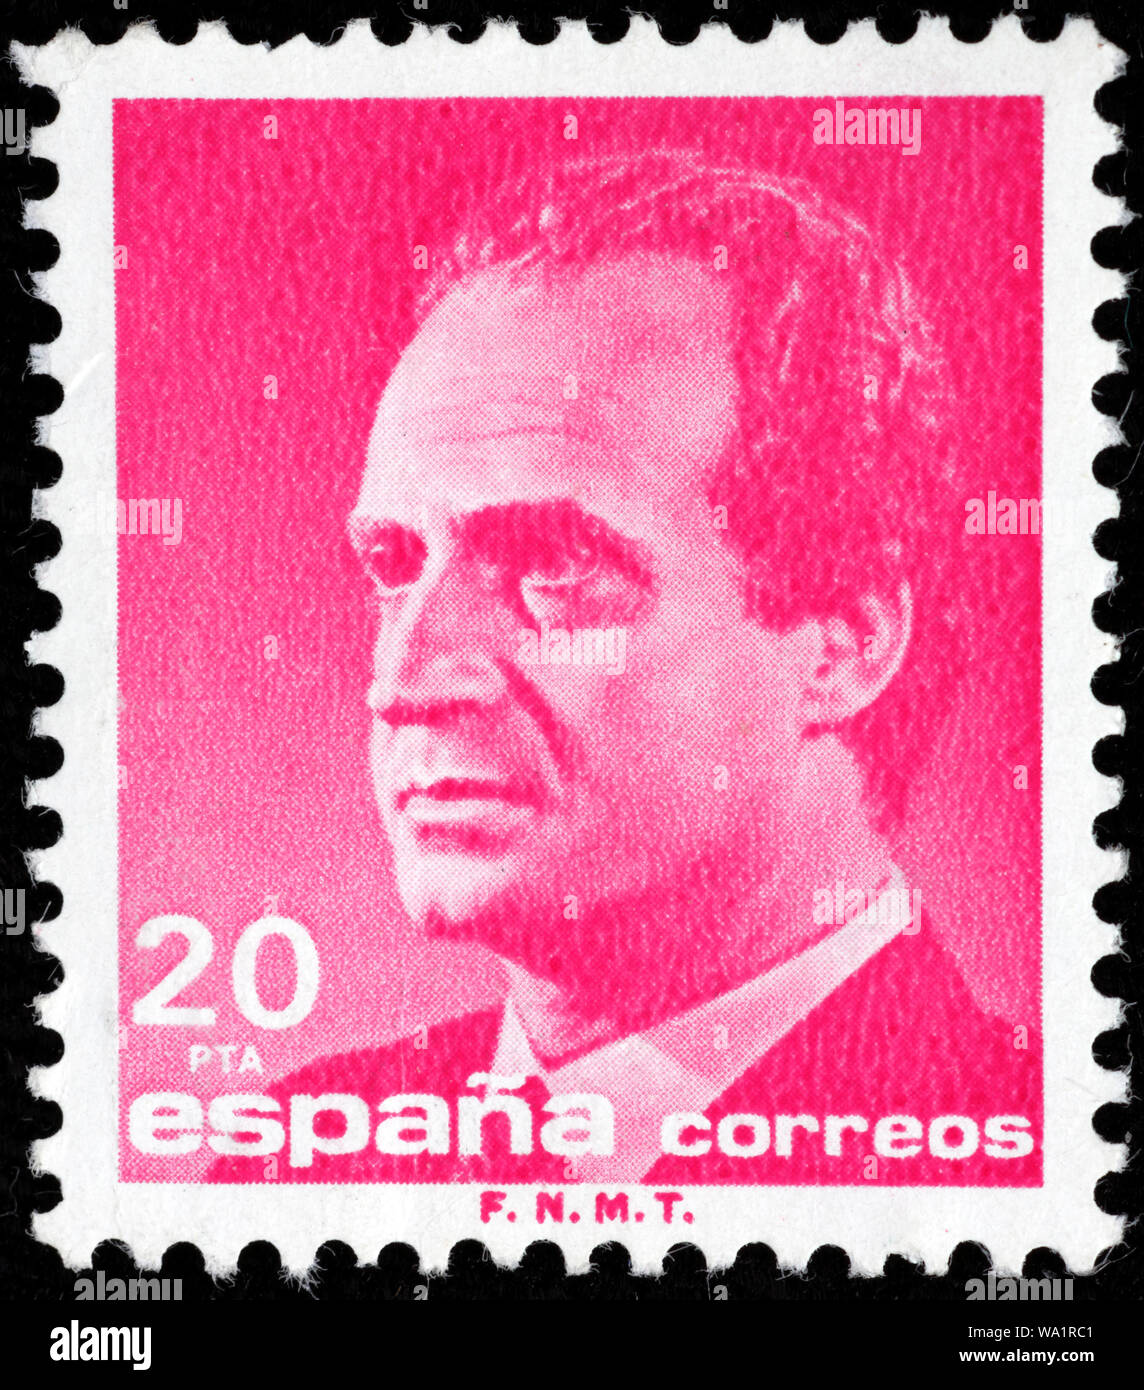 Juan Carlos I, King of Spain, postage stamp, Spain, 1987 Stock Photo